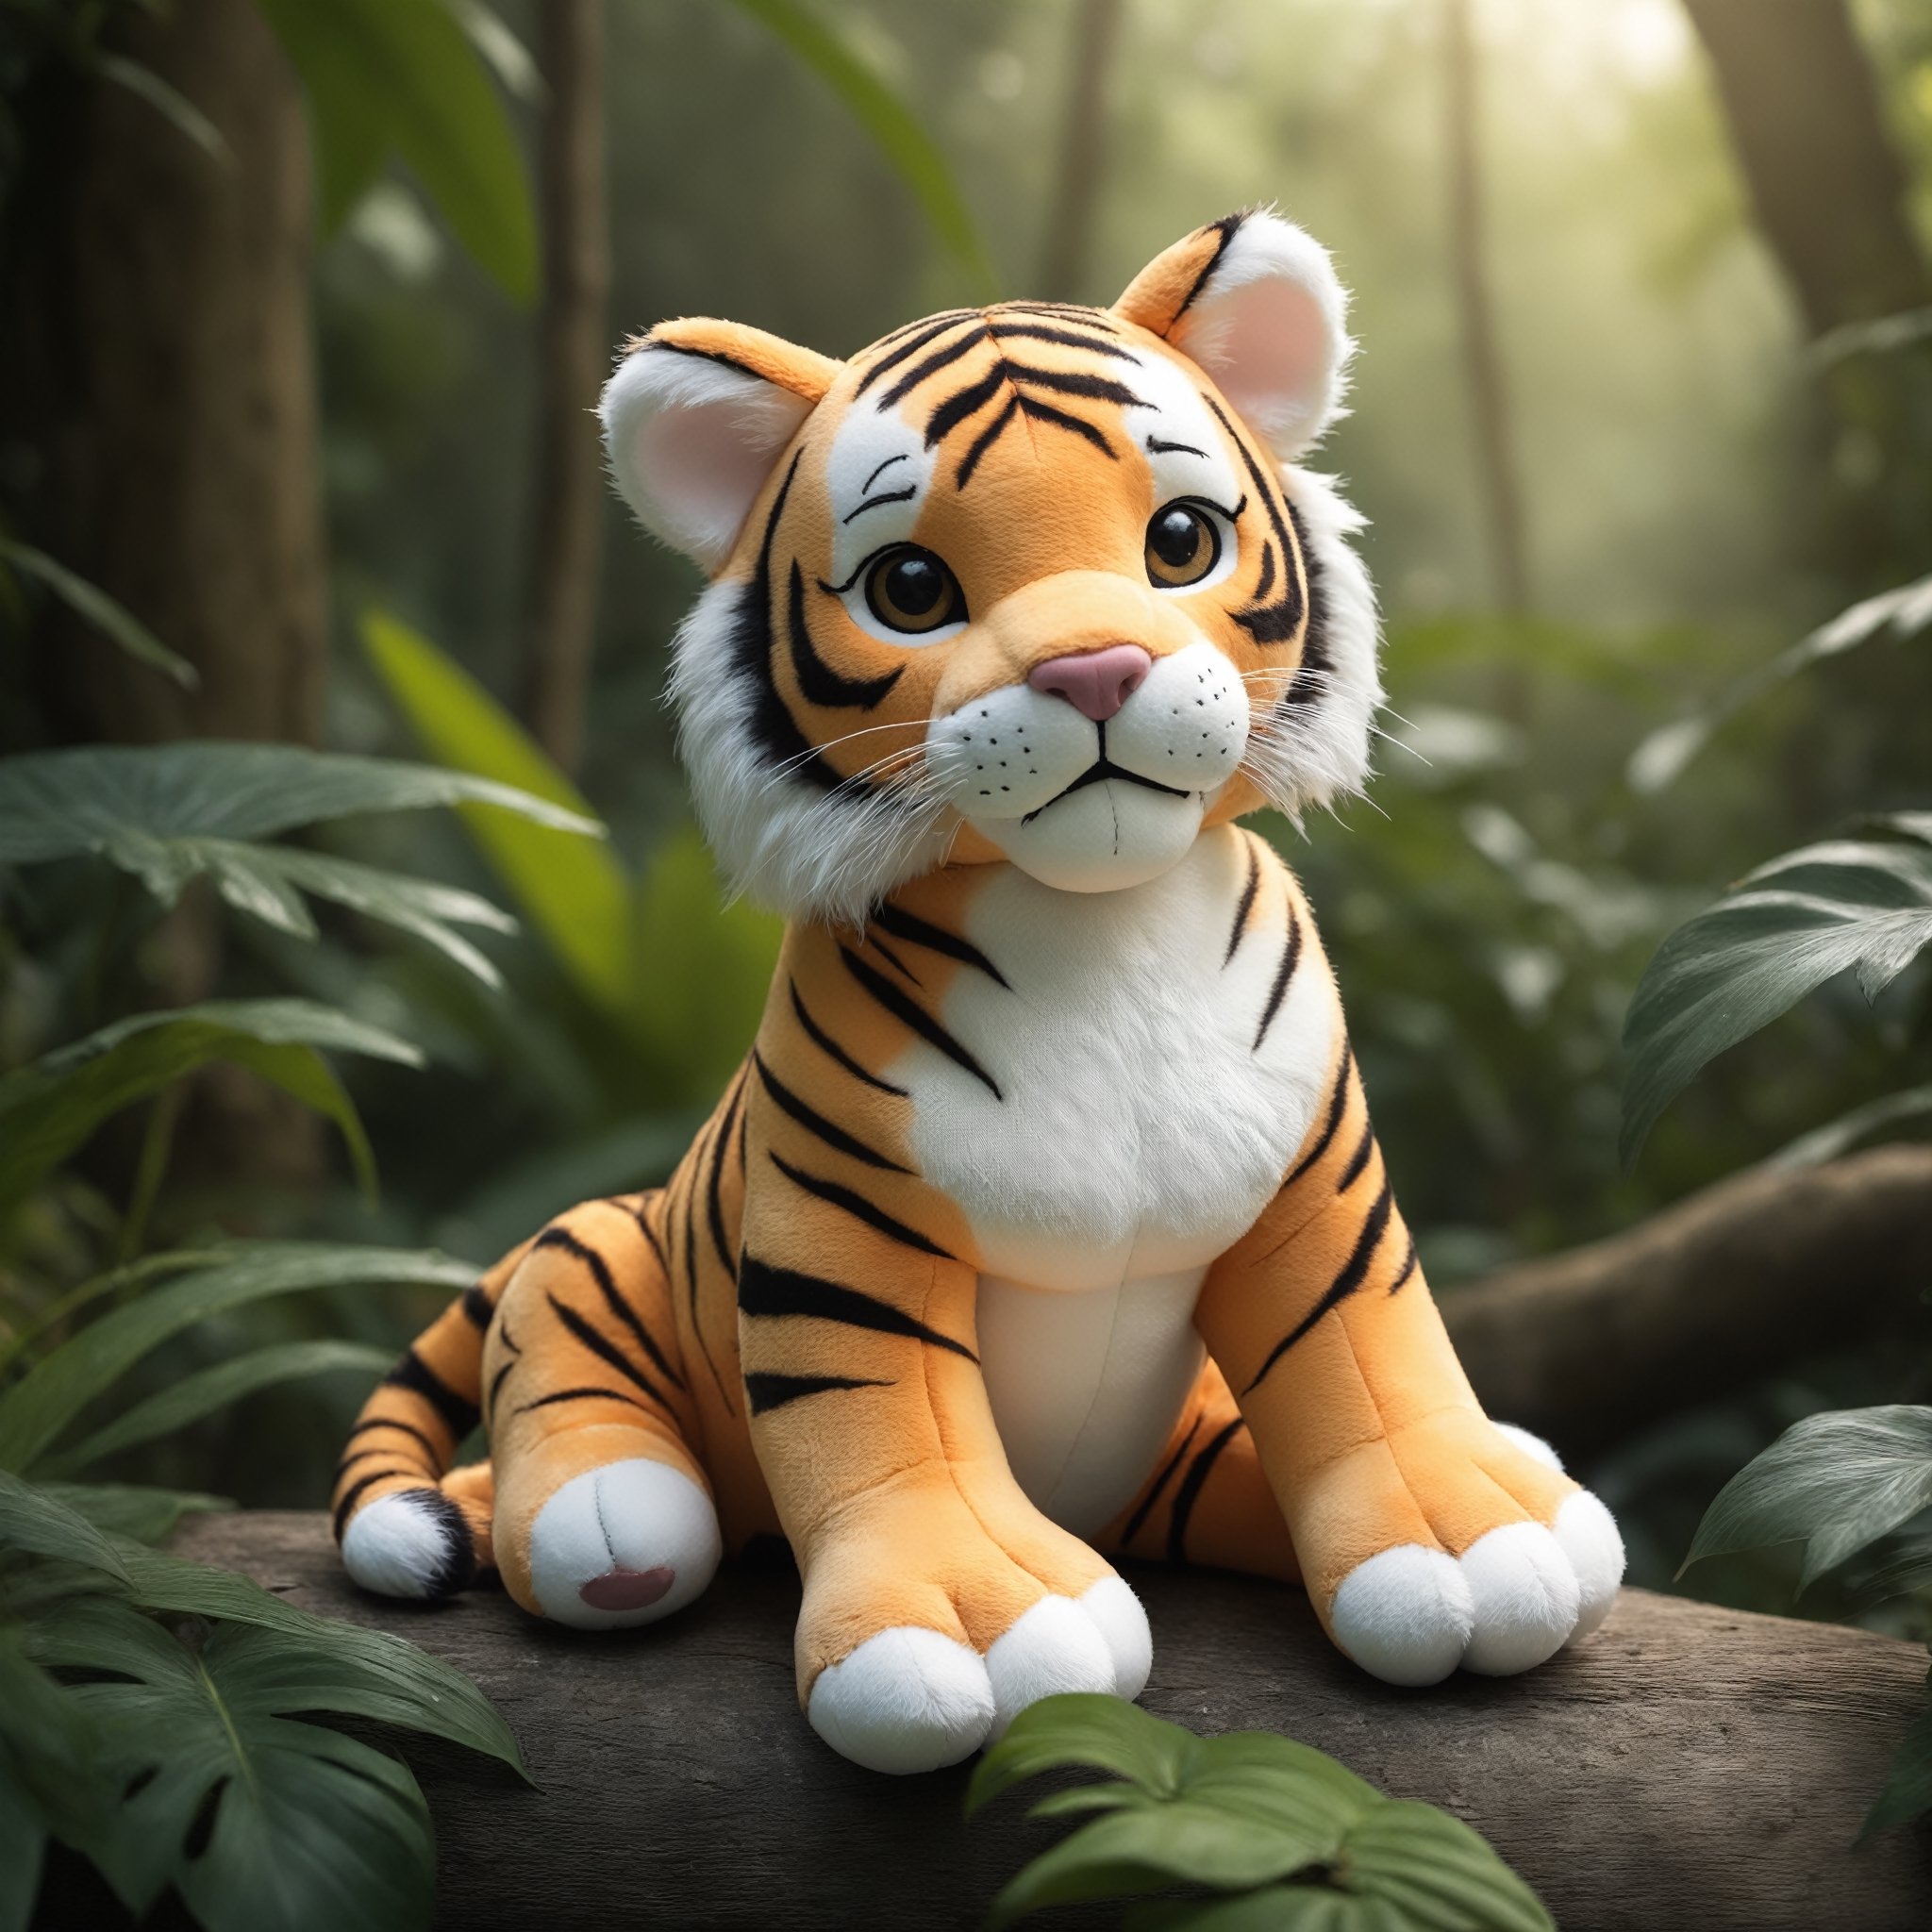 Detailed , photo, tiger plushie, natural light , jungle background 